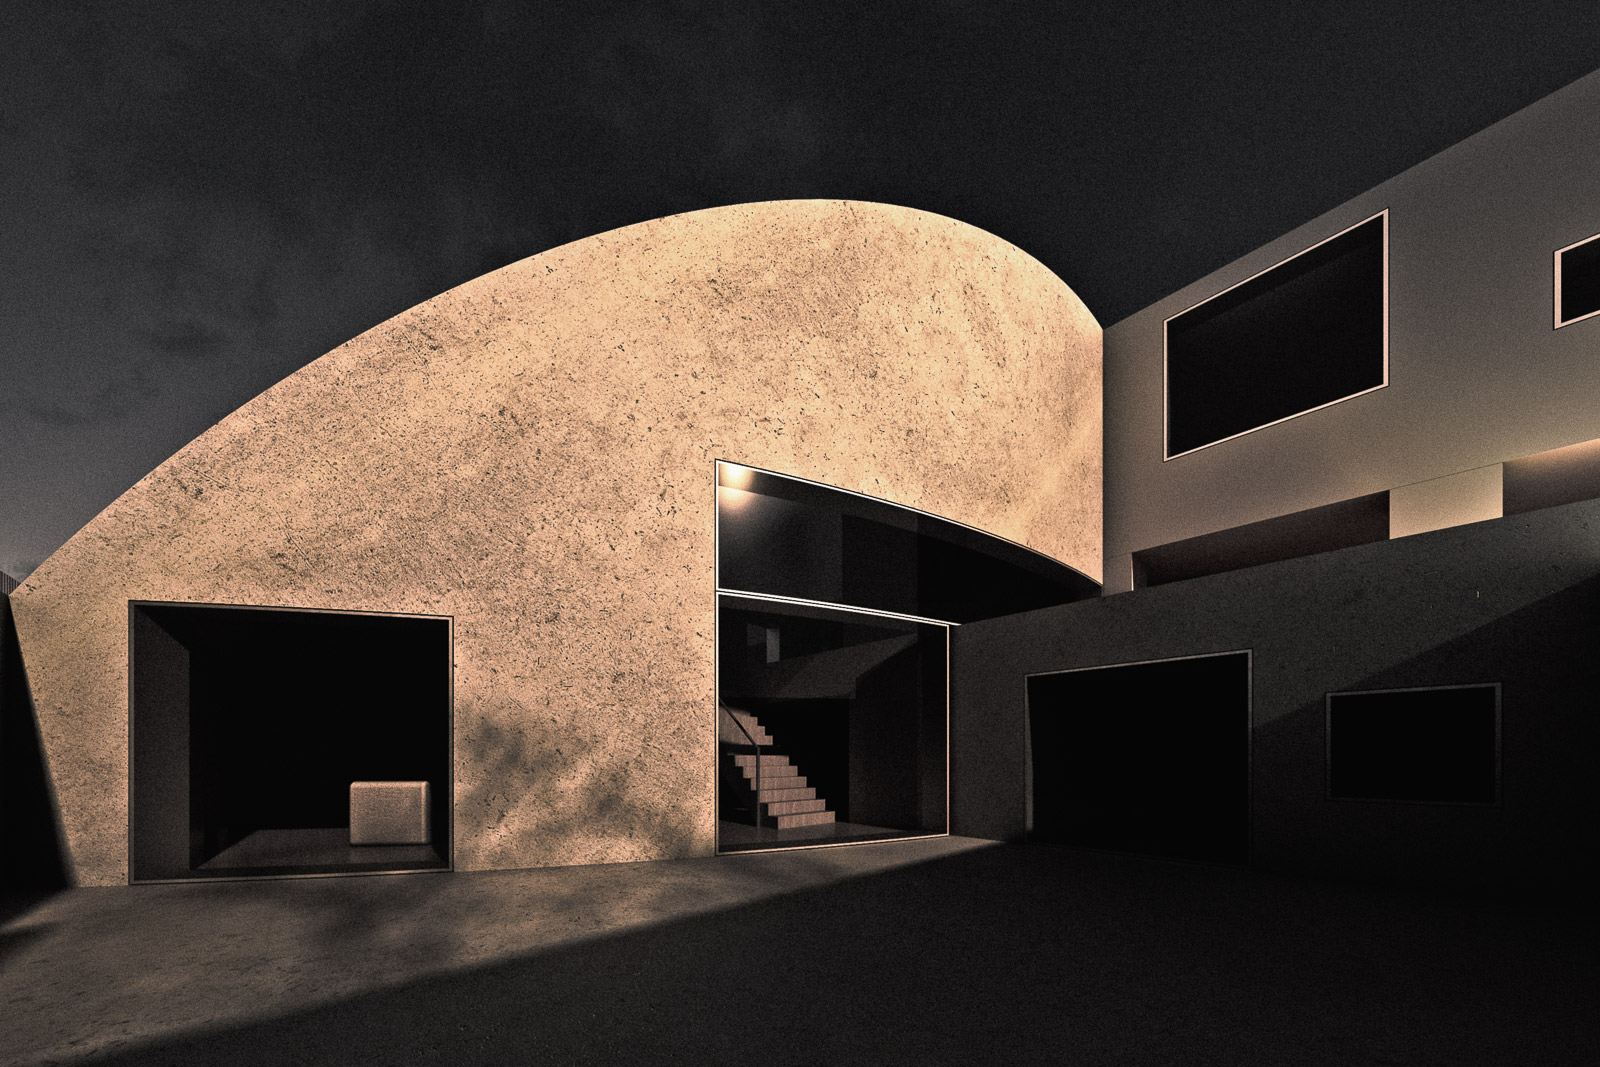 Concrete Moon House